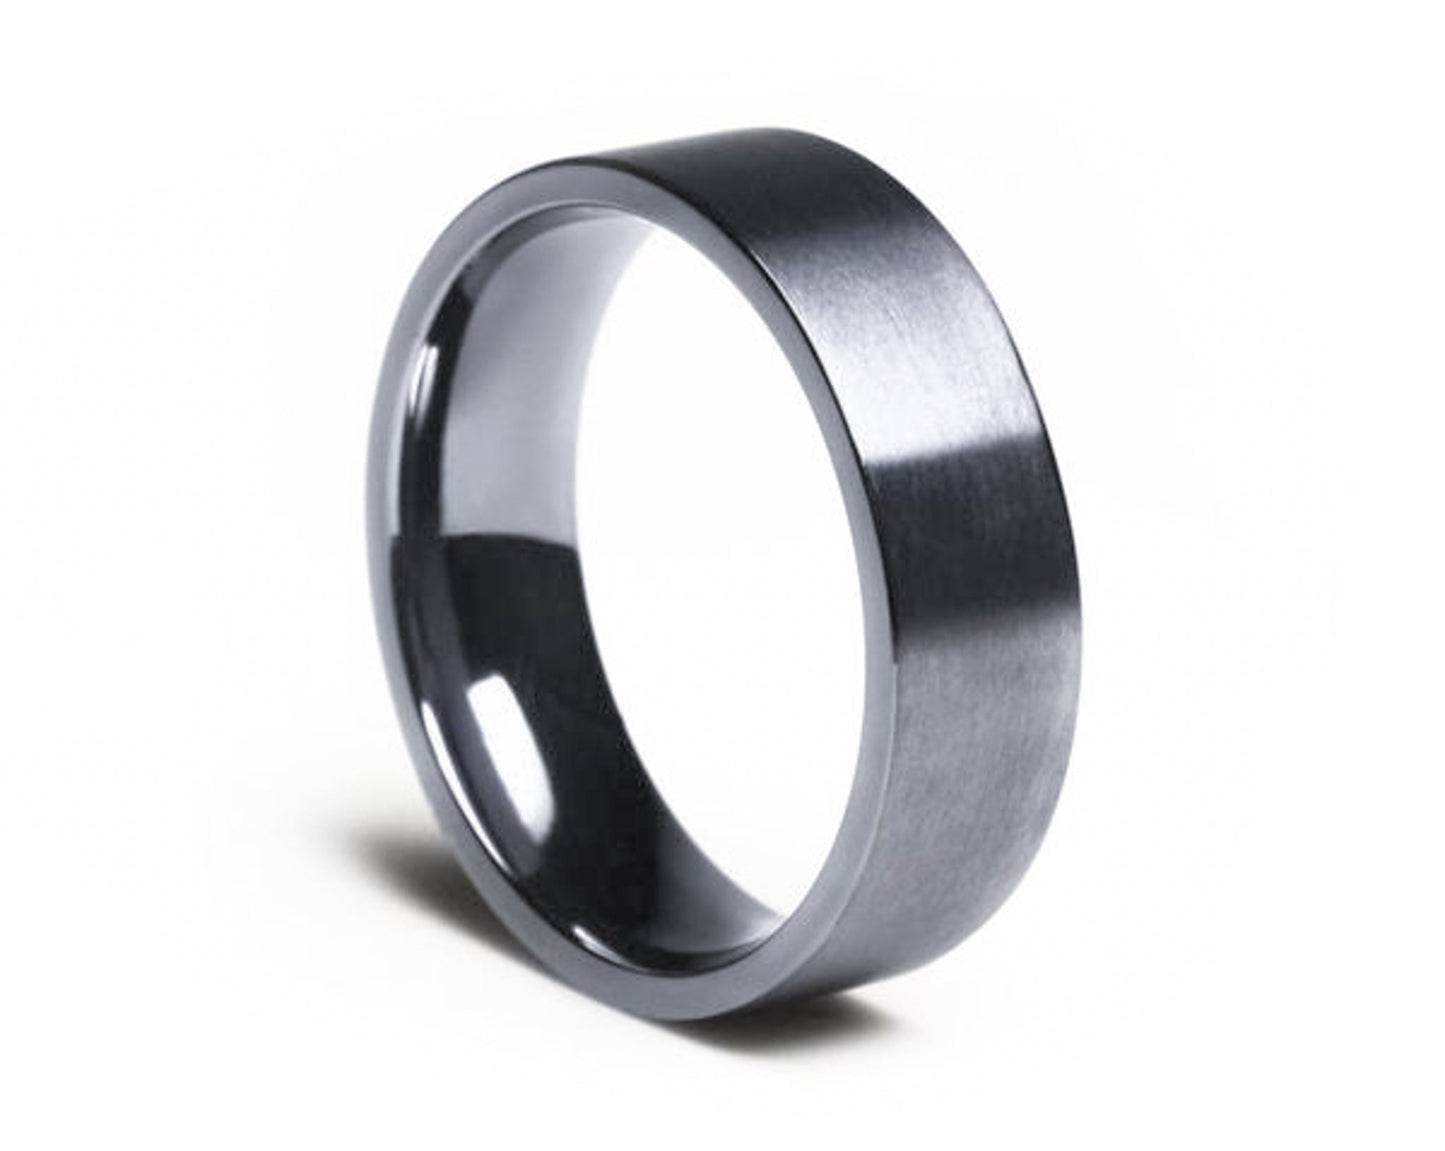 The Morello Tantalum Ring Rings 